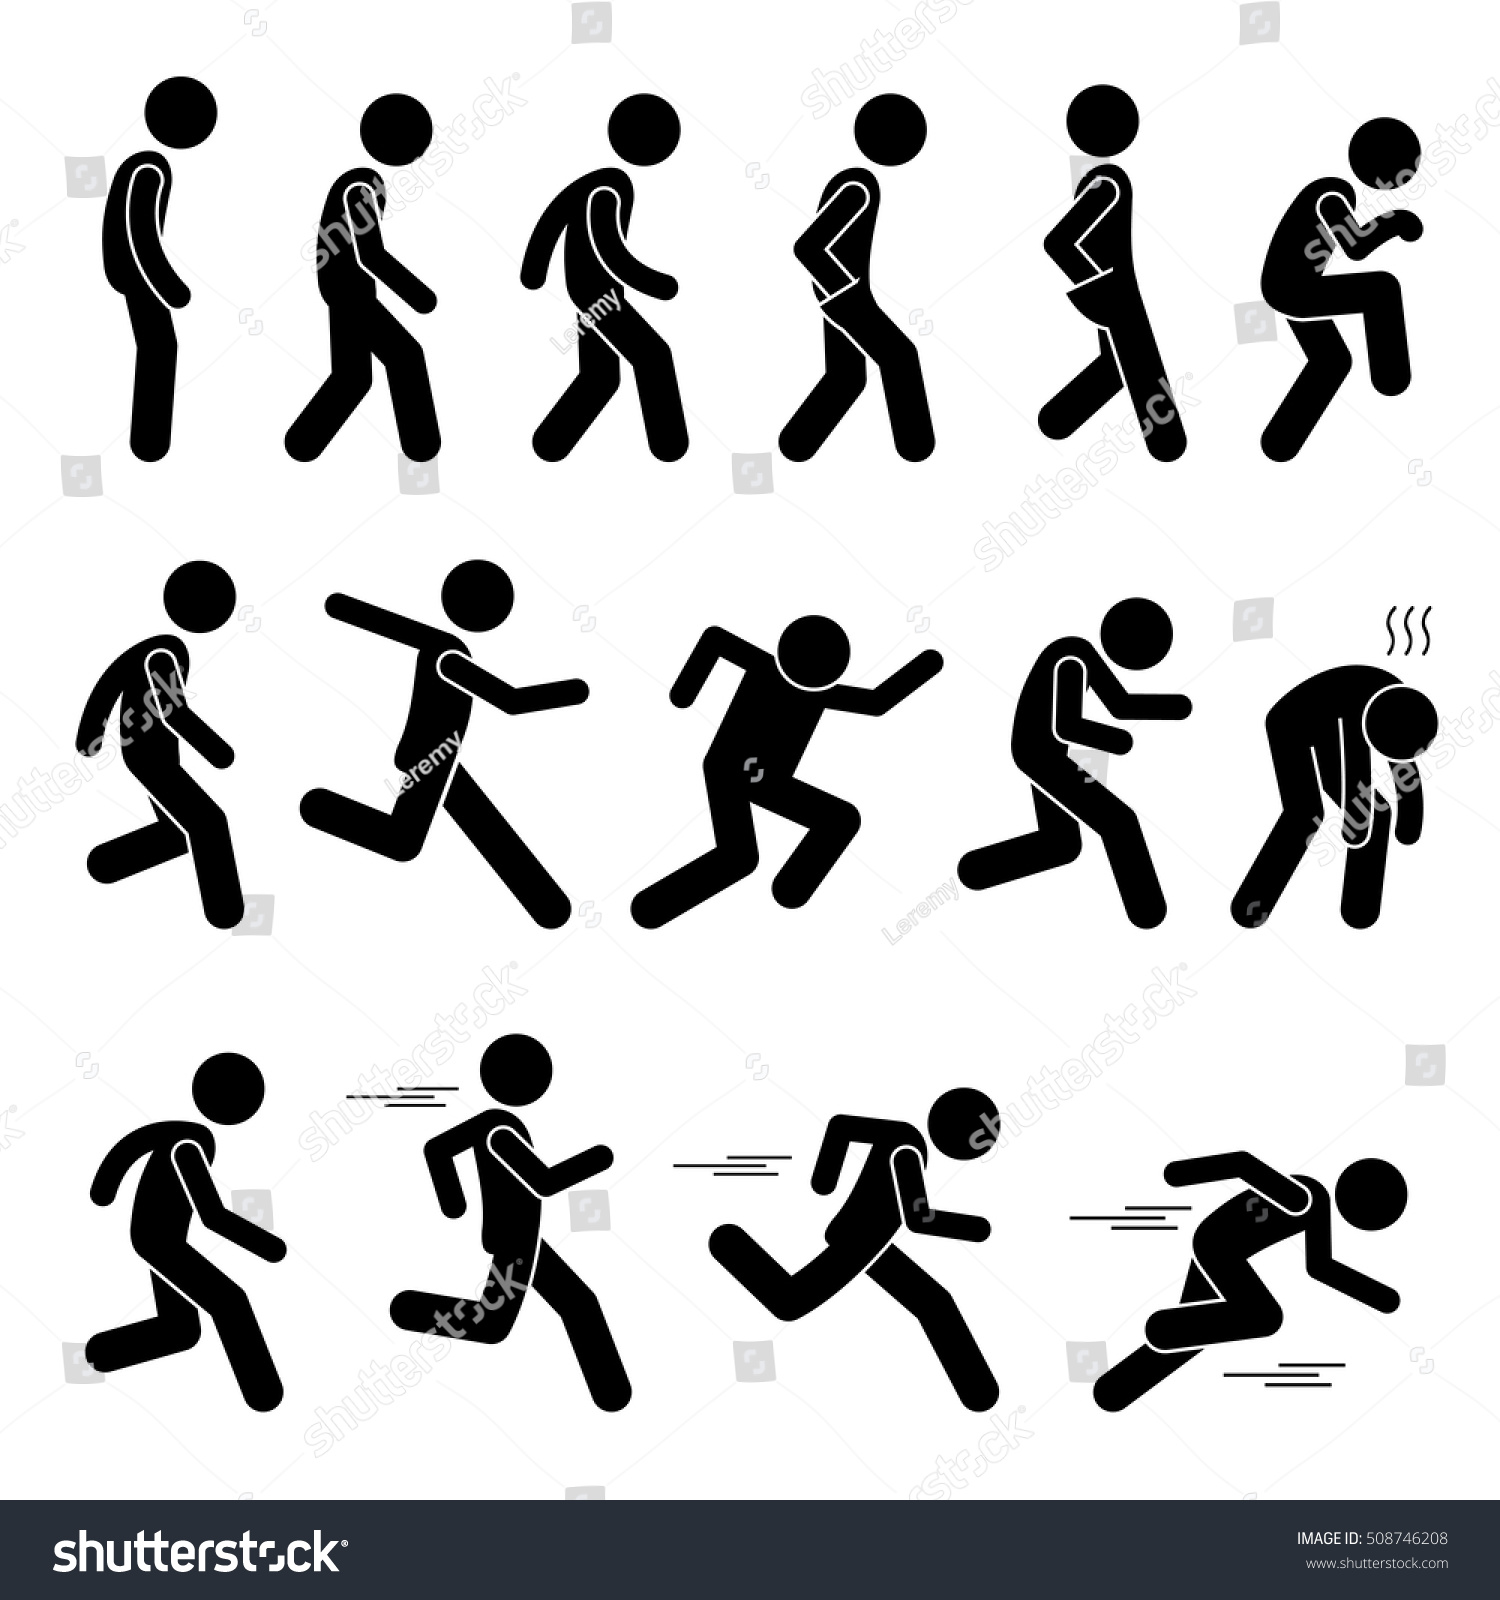 Various Human Man People Walking Running のベクター画像素材 ロイヤリティフリー